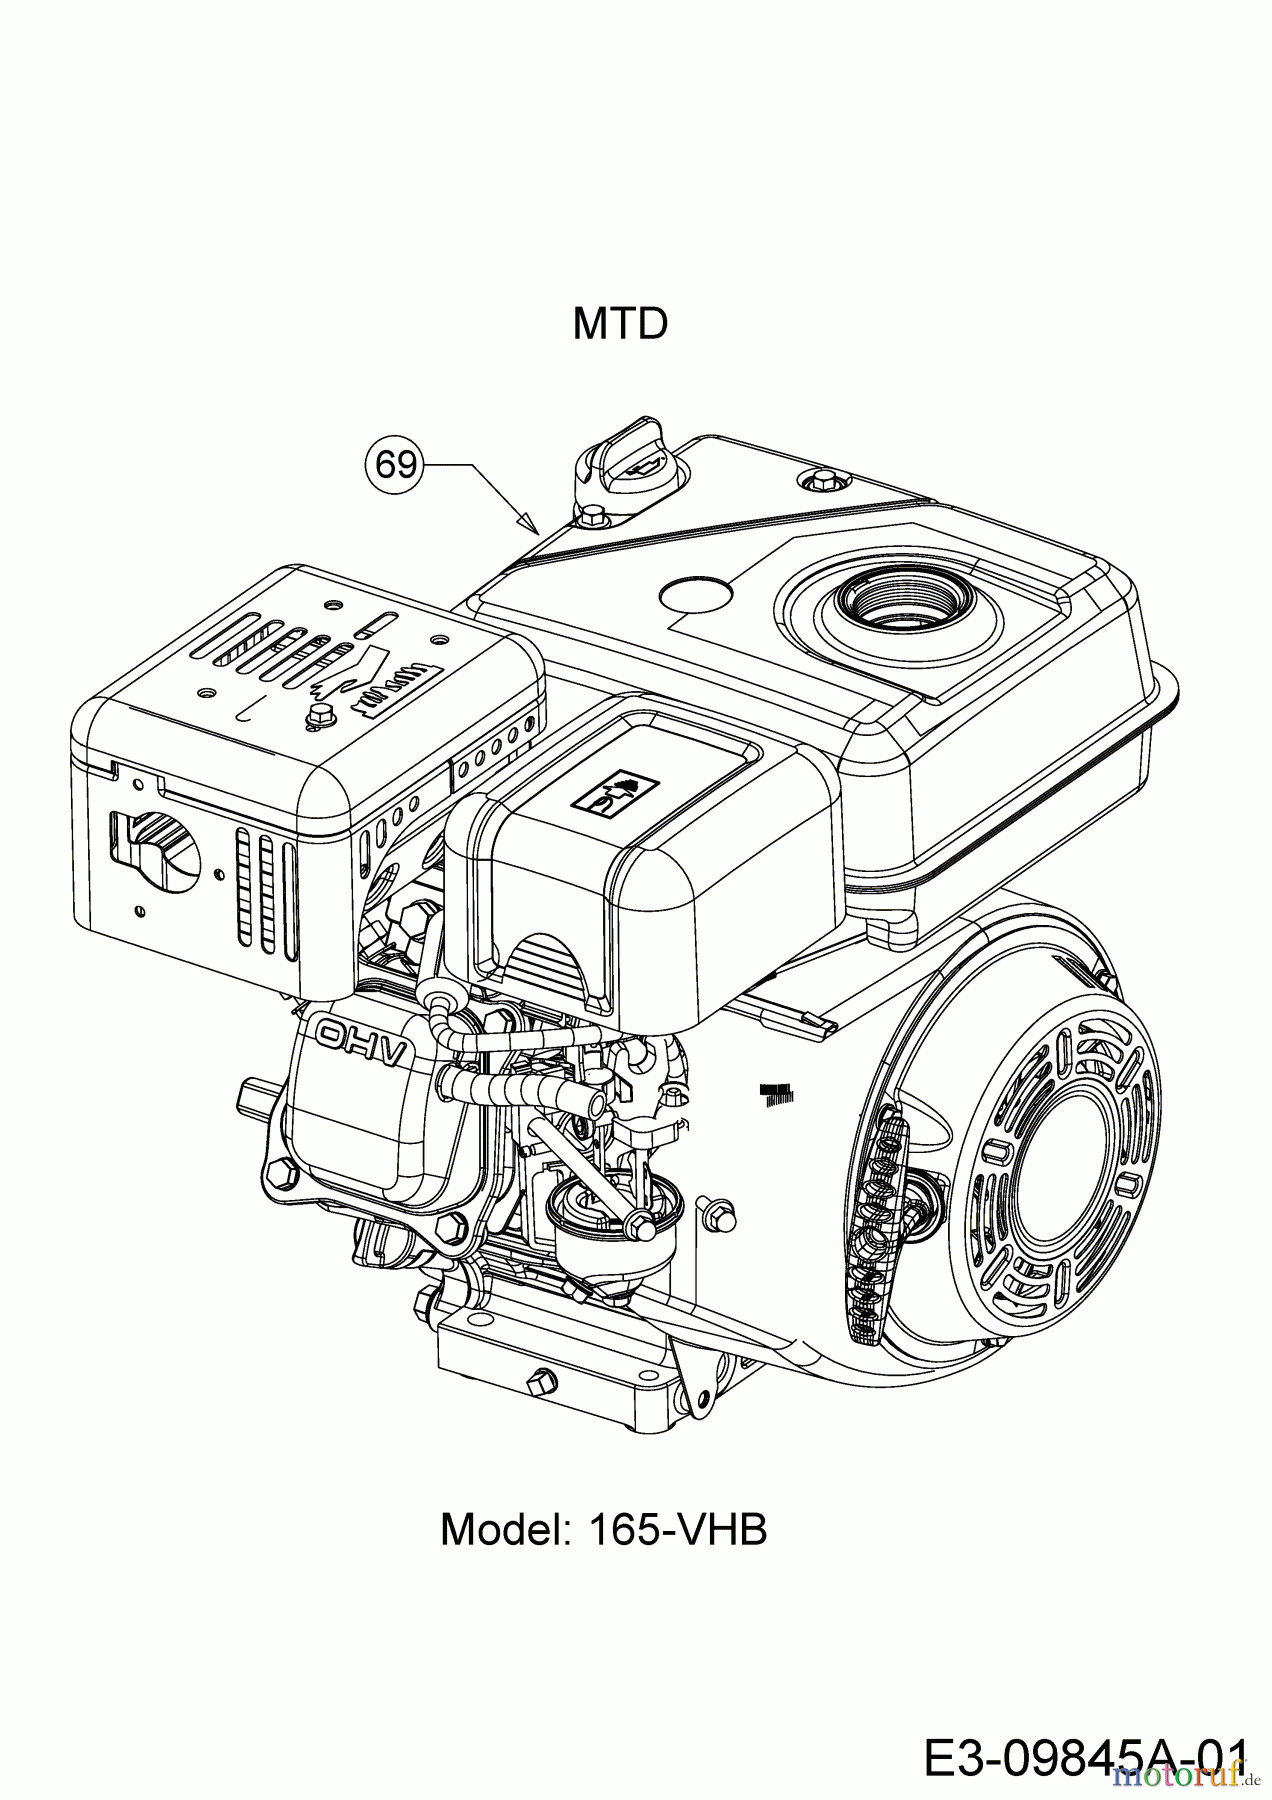  MTD Tillers T/330 M 21D-33MV678  (2016) Engine MTD